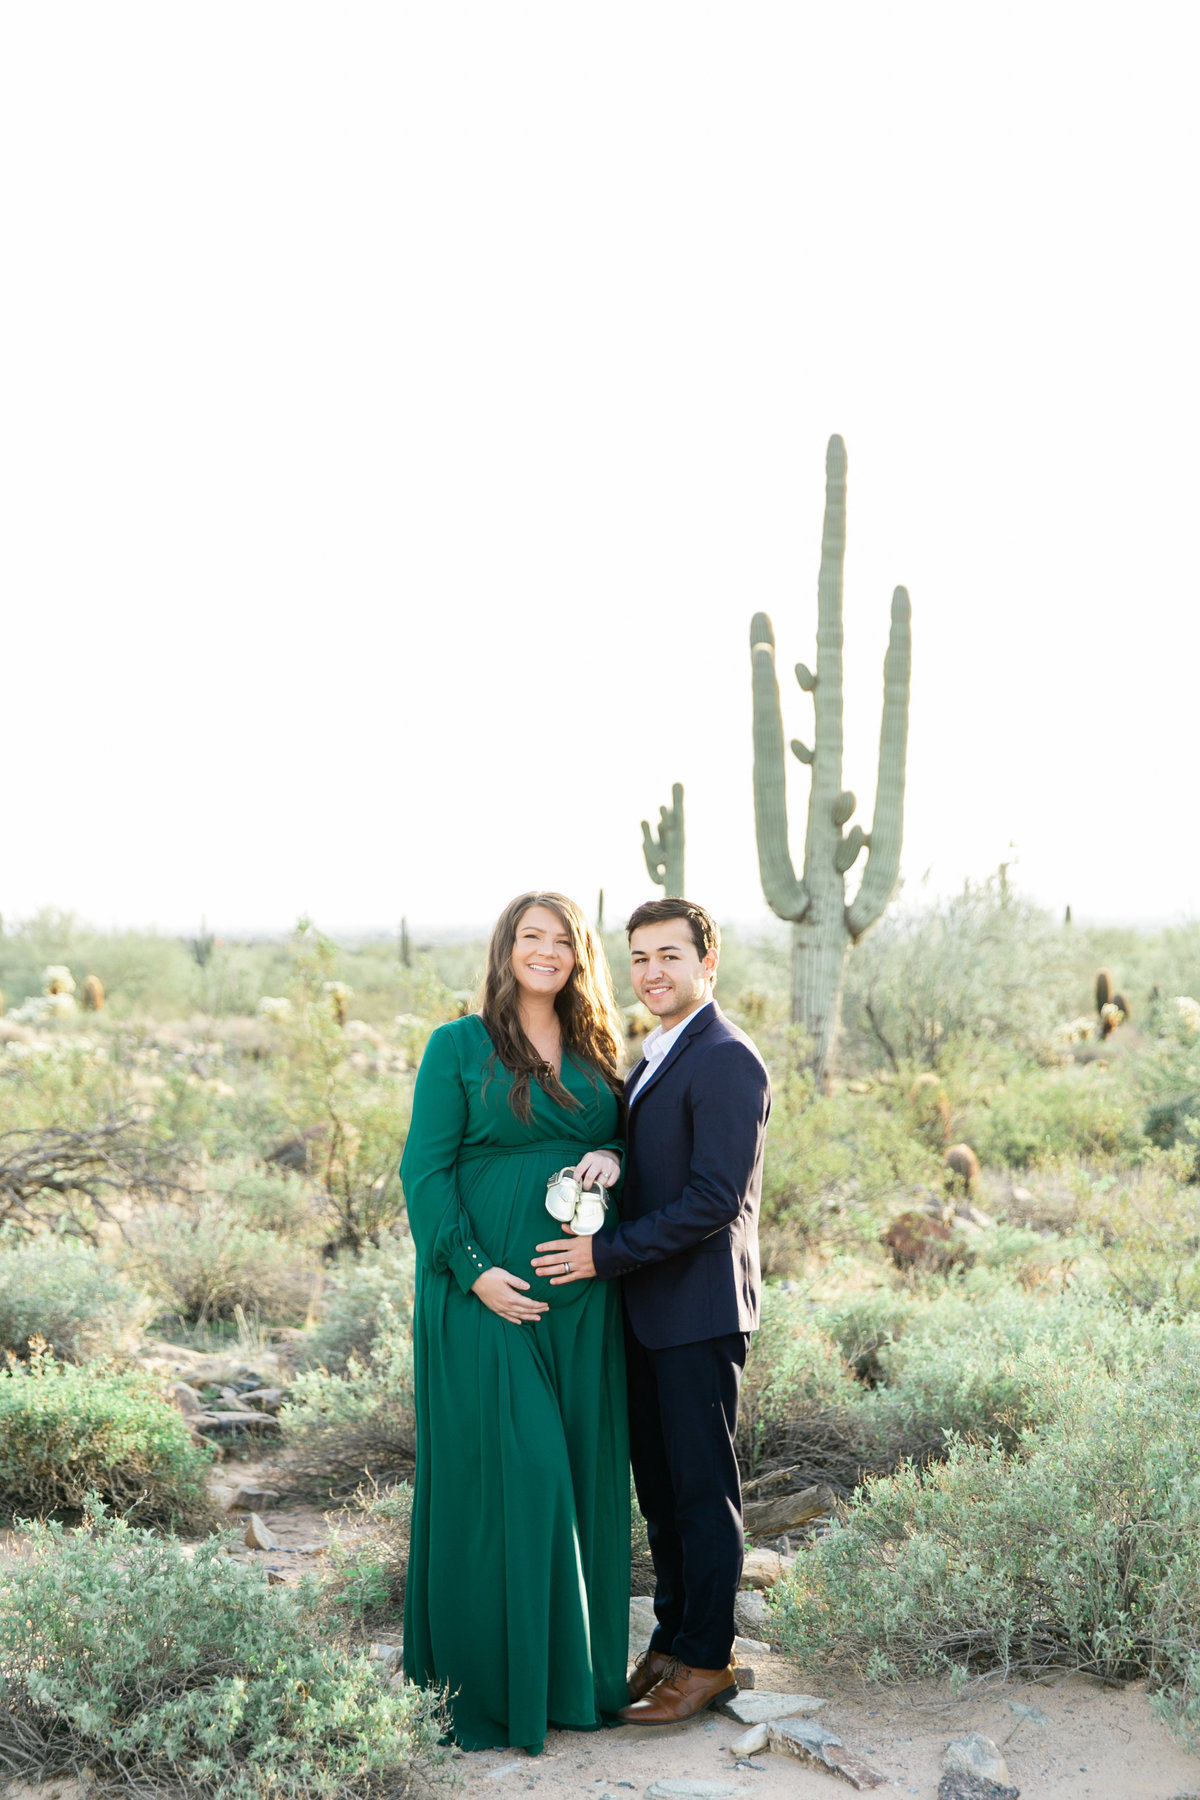 Karlie Colleen Photography - Scottsdale Arizona - Maternity Photos - Shelby & Cris-25